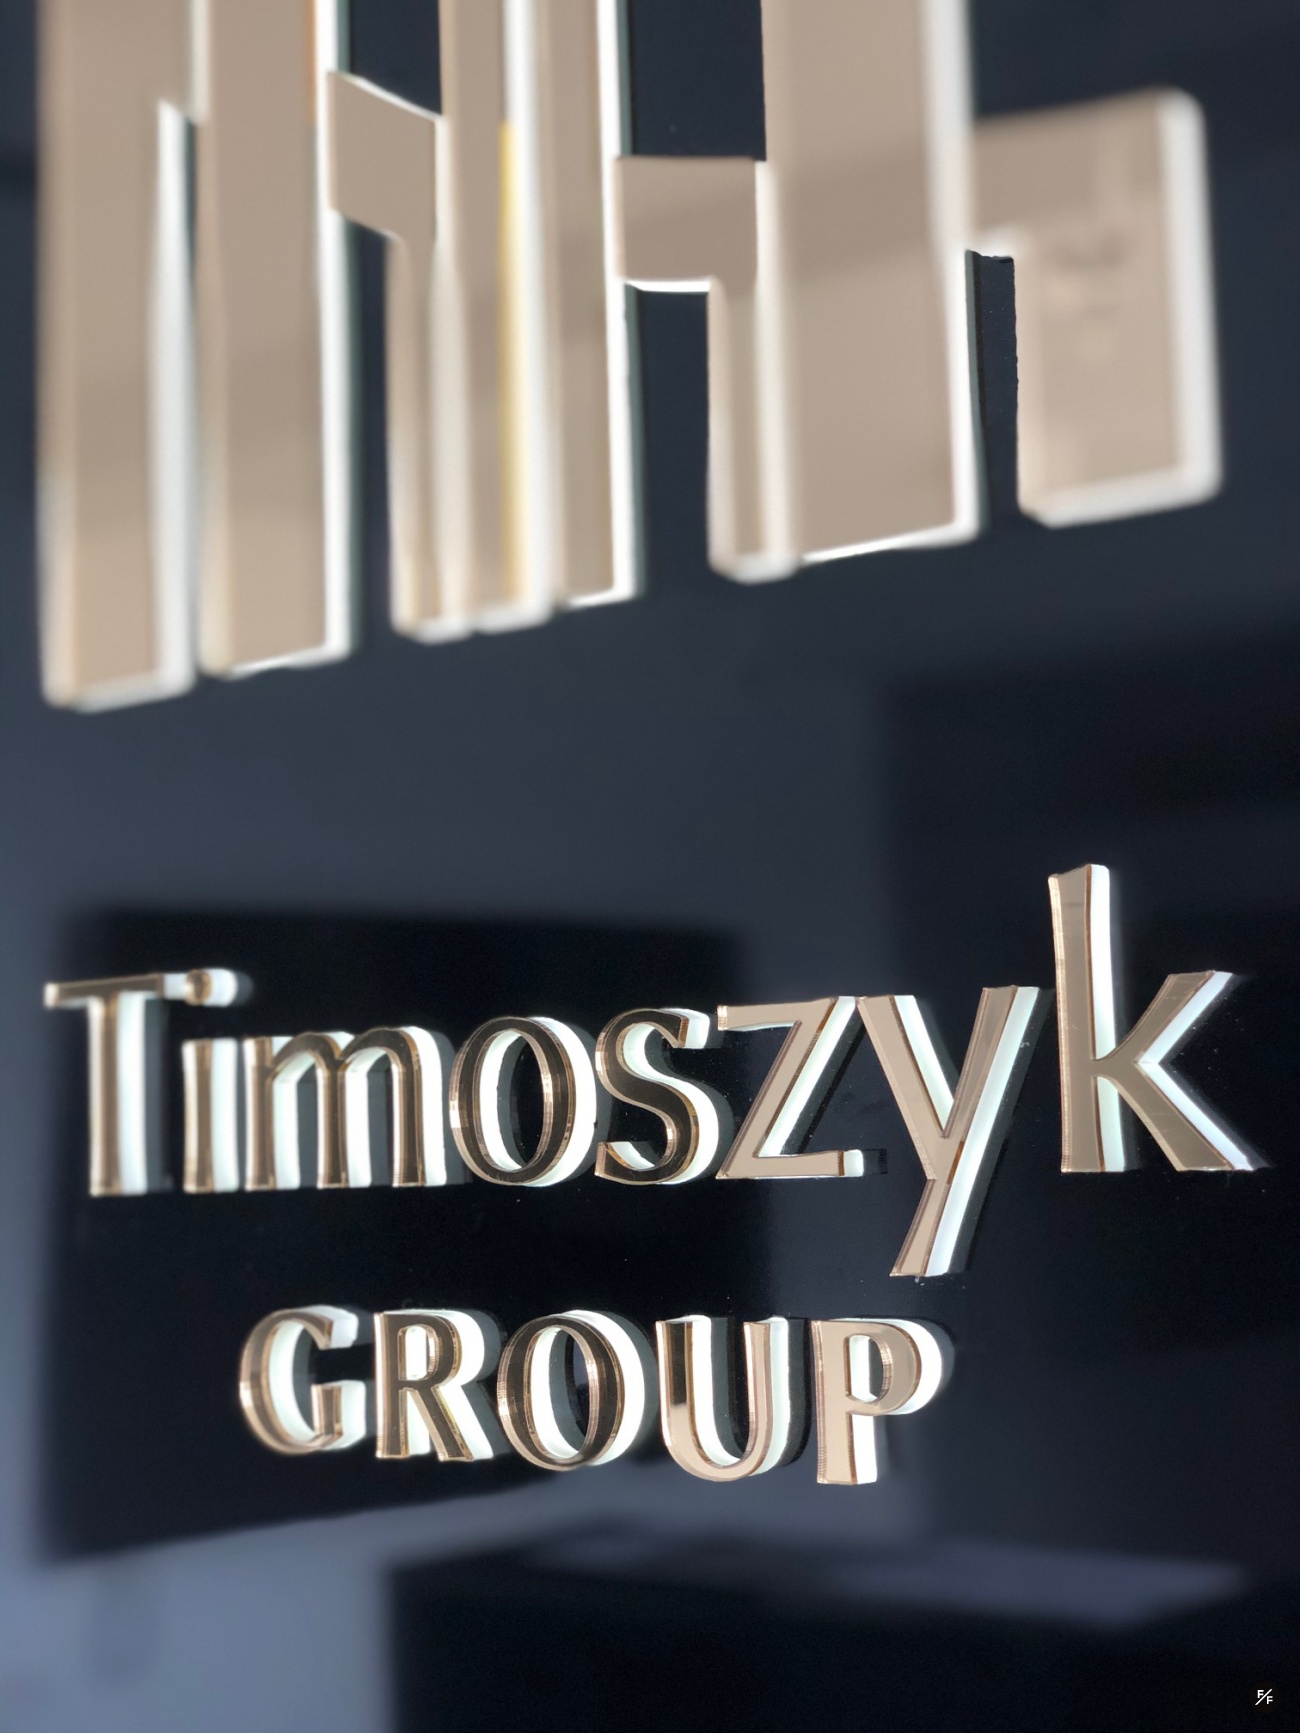 Timoszyk Group